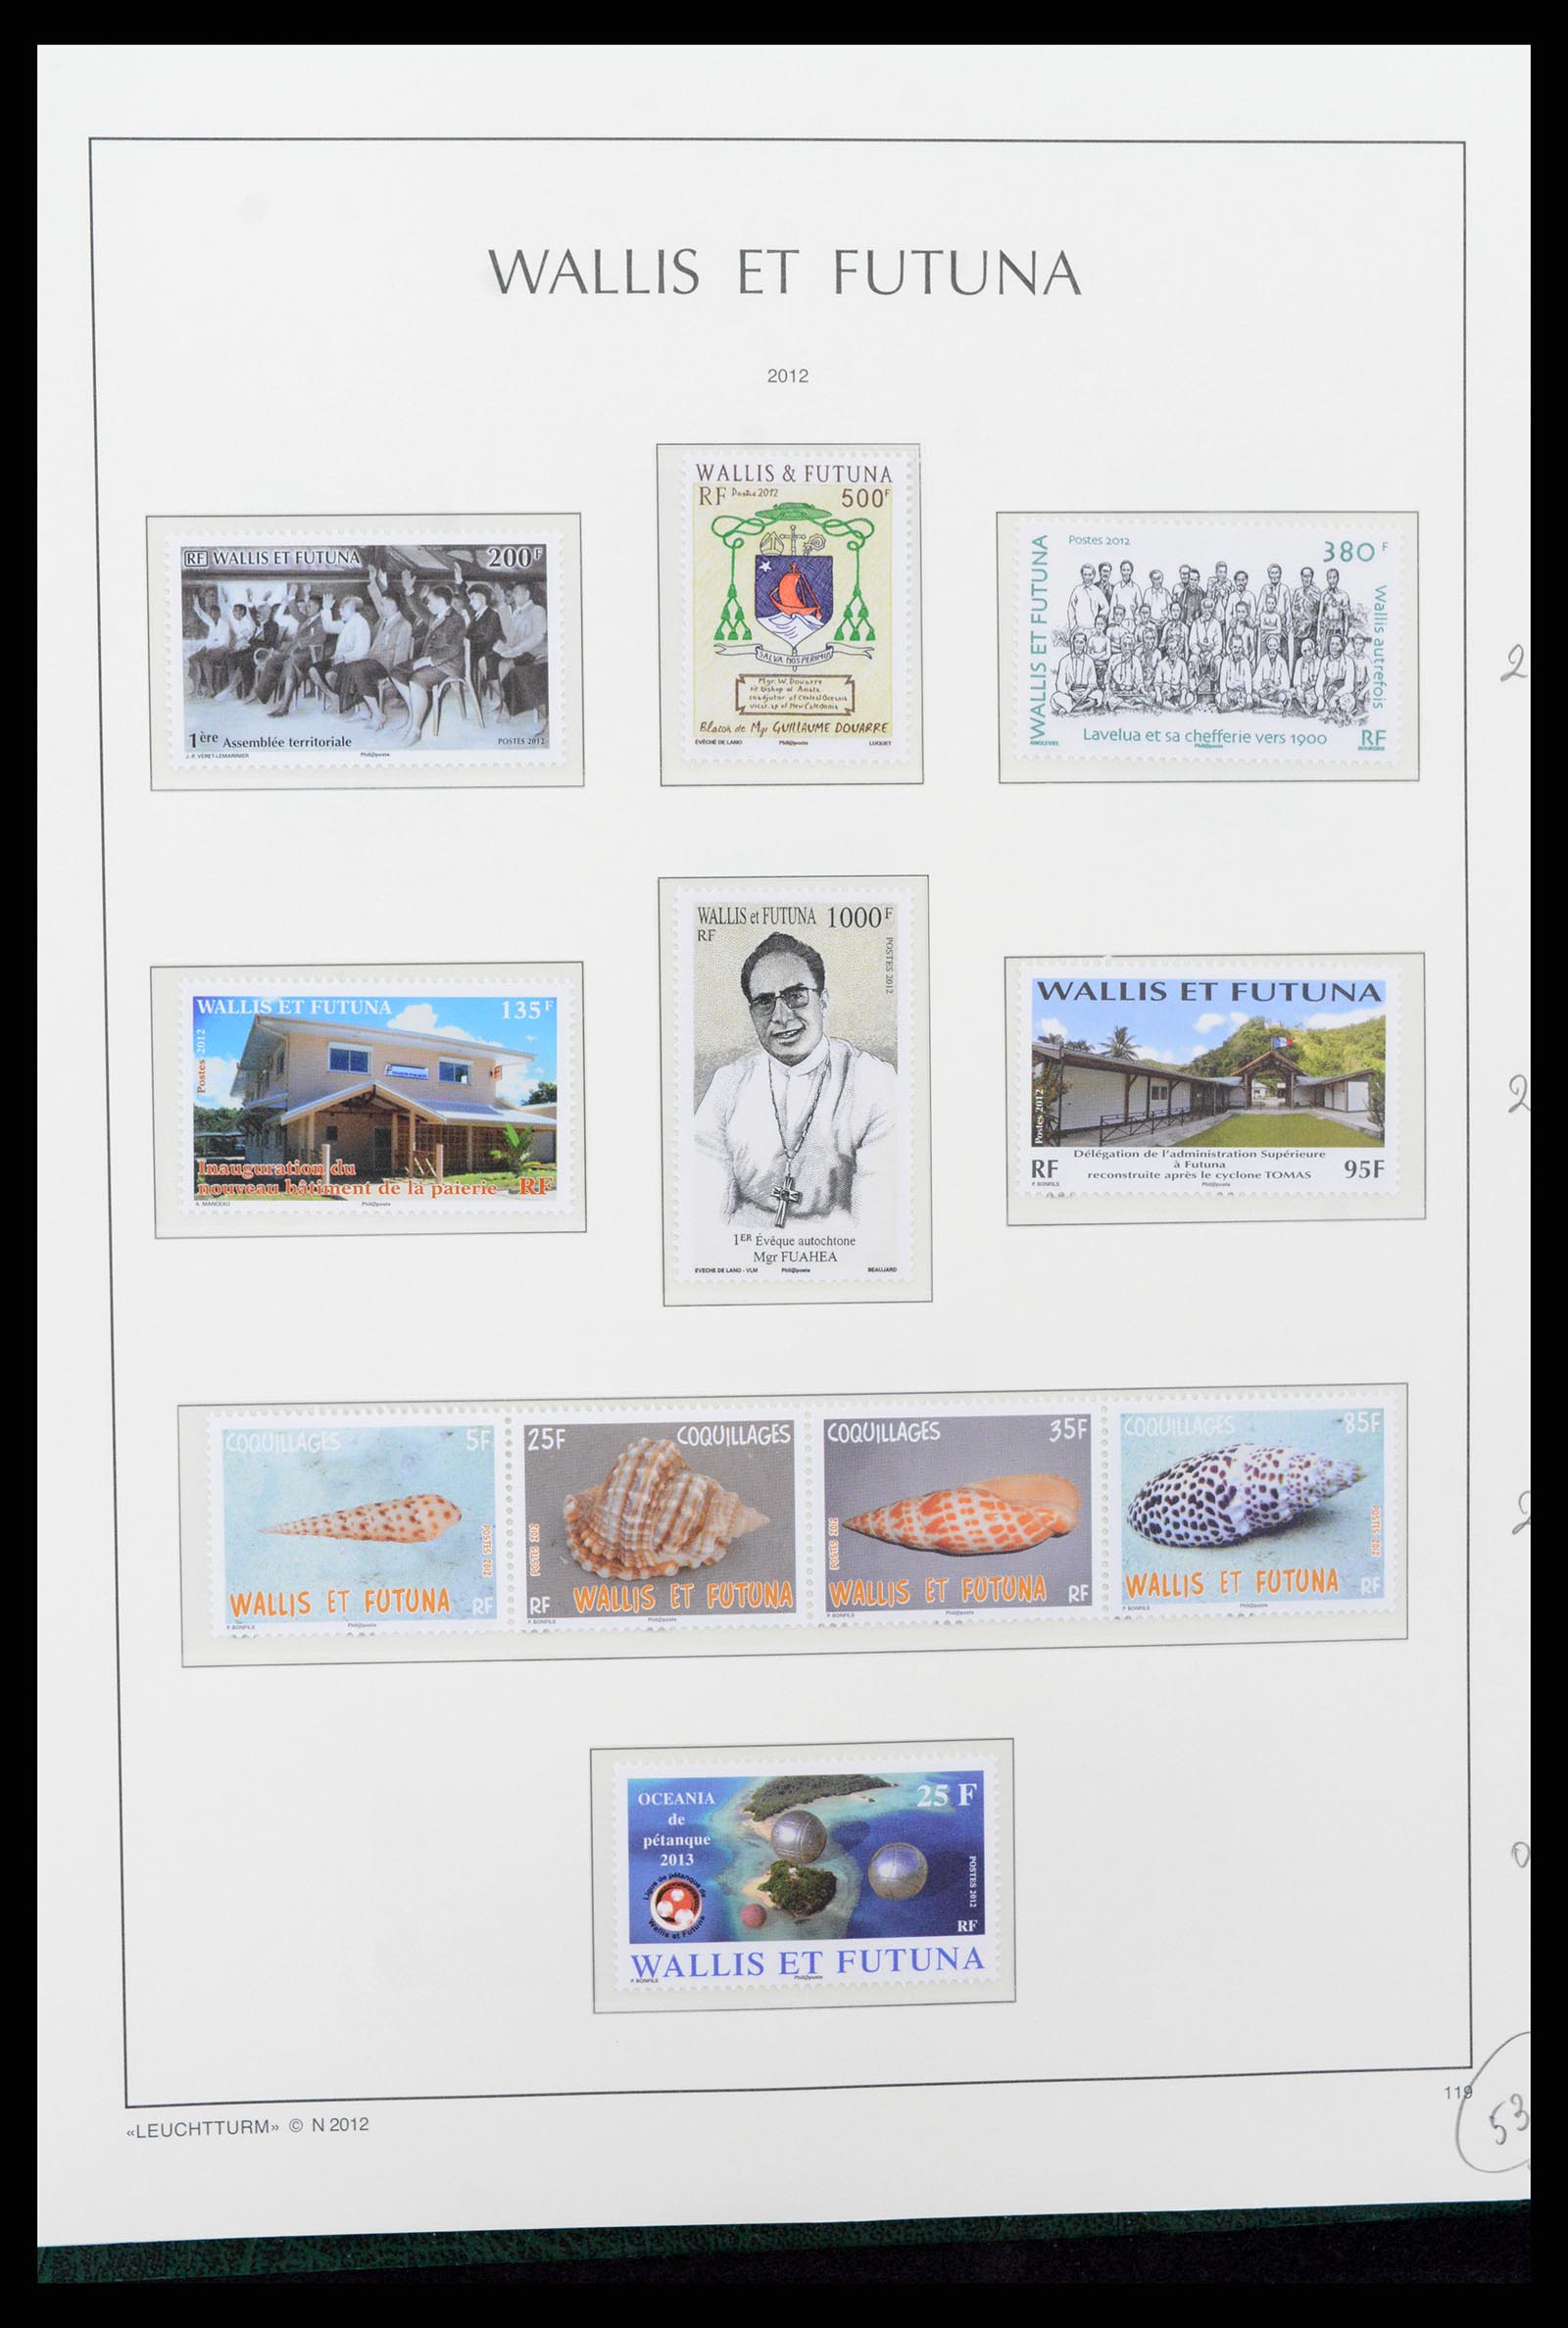 37316 086 - Stamp collection 37316 Wallis et Futuna 1980-2018!